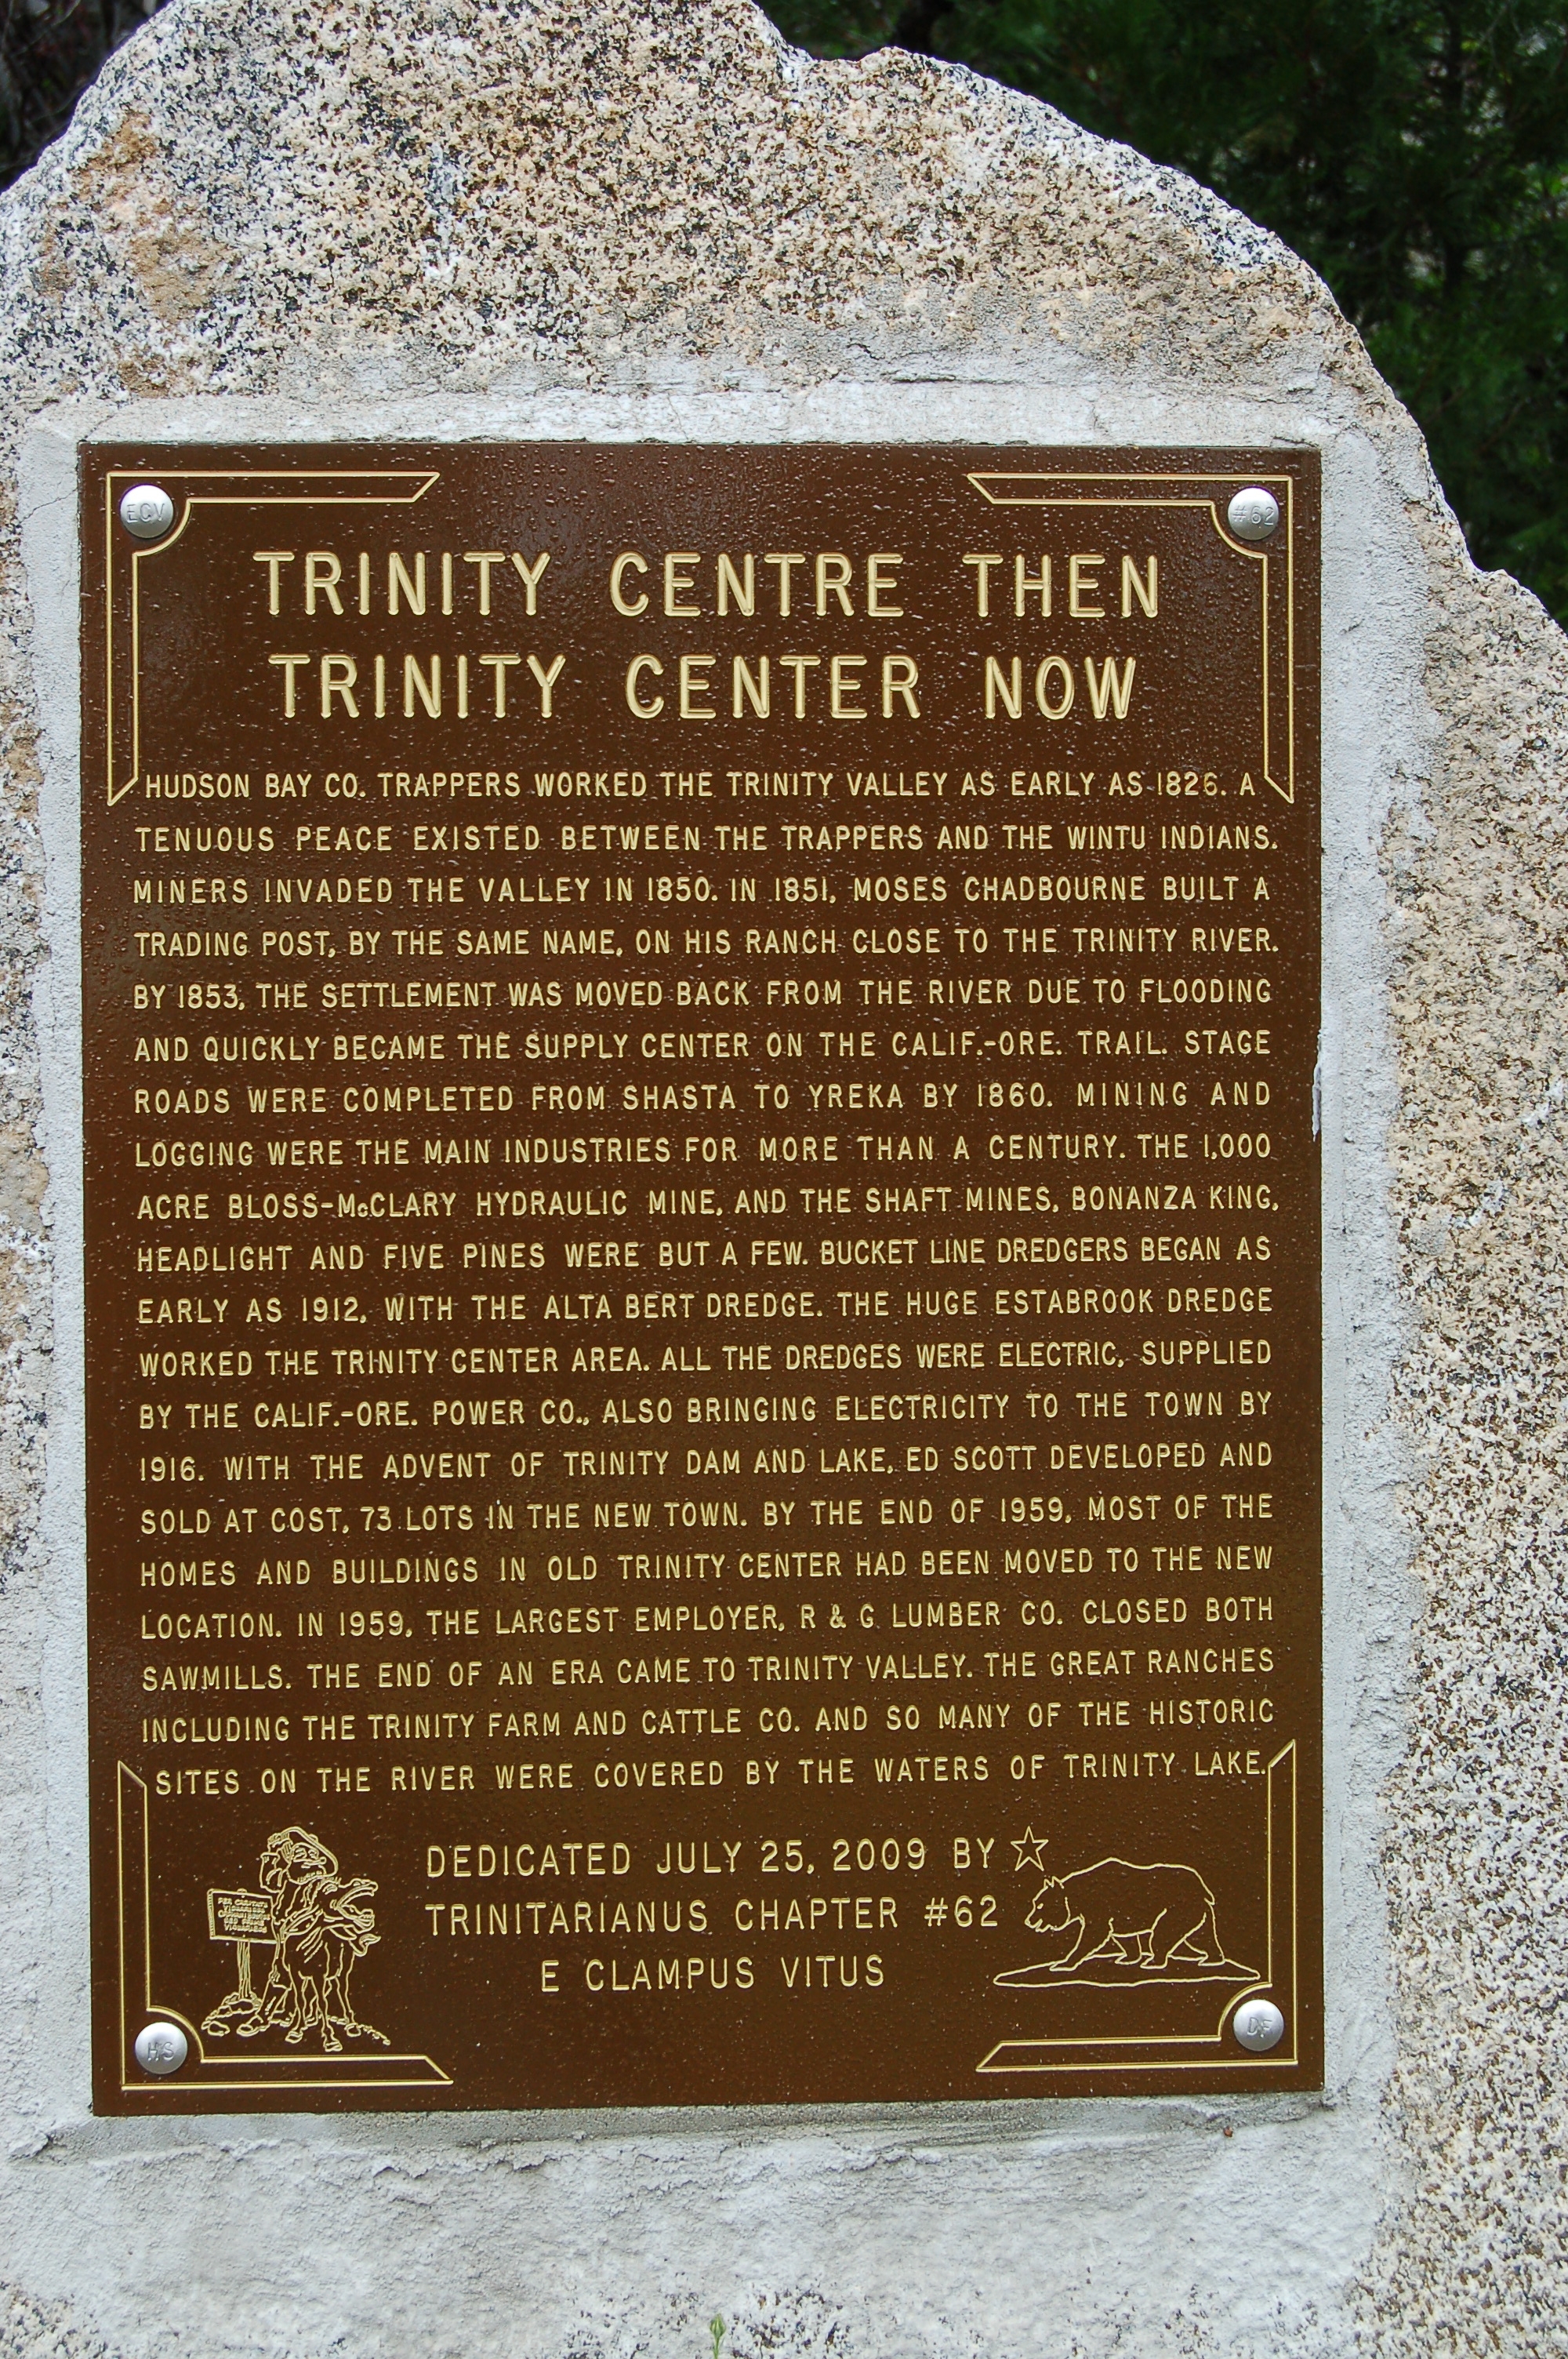 Trinity Center Then – Trinity Center Now. Marker